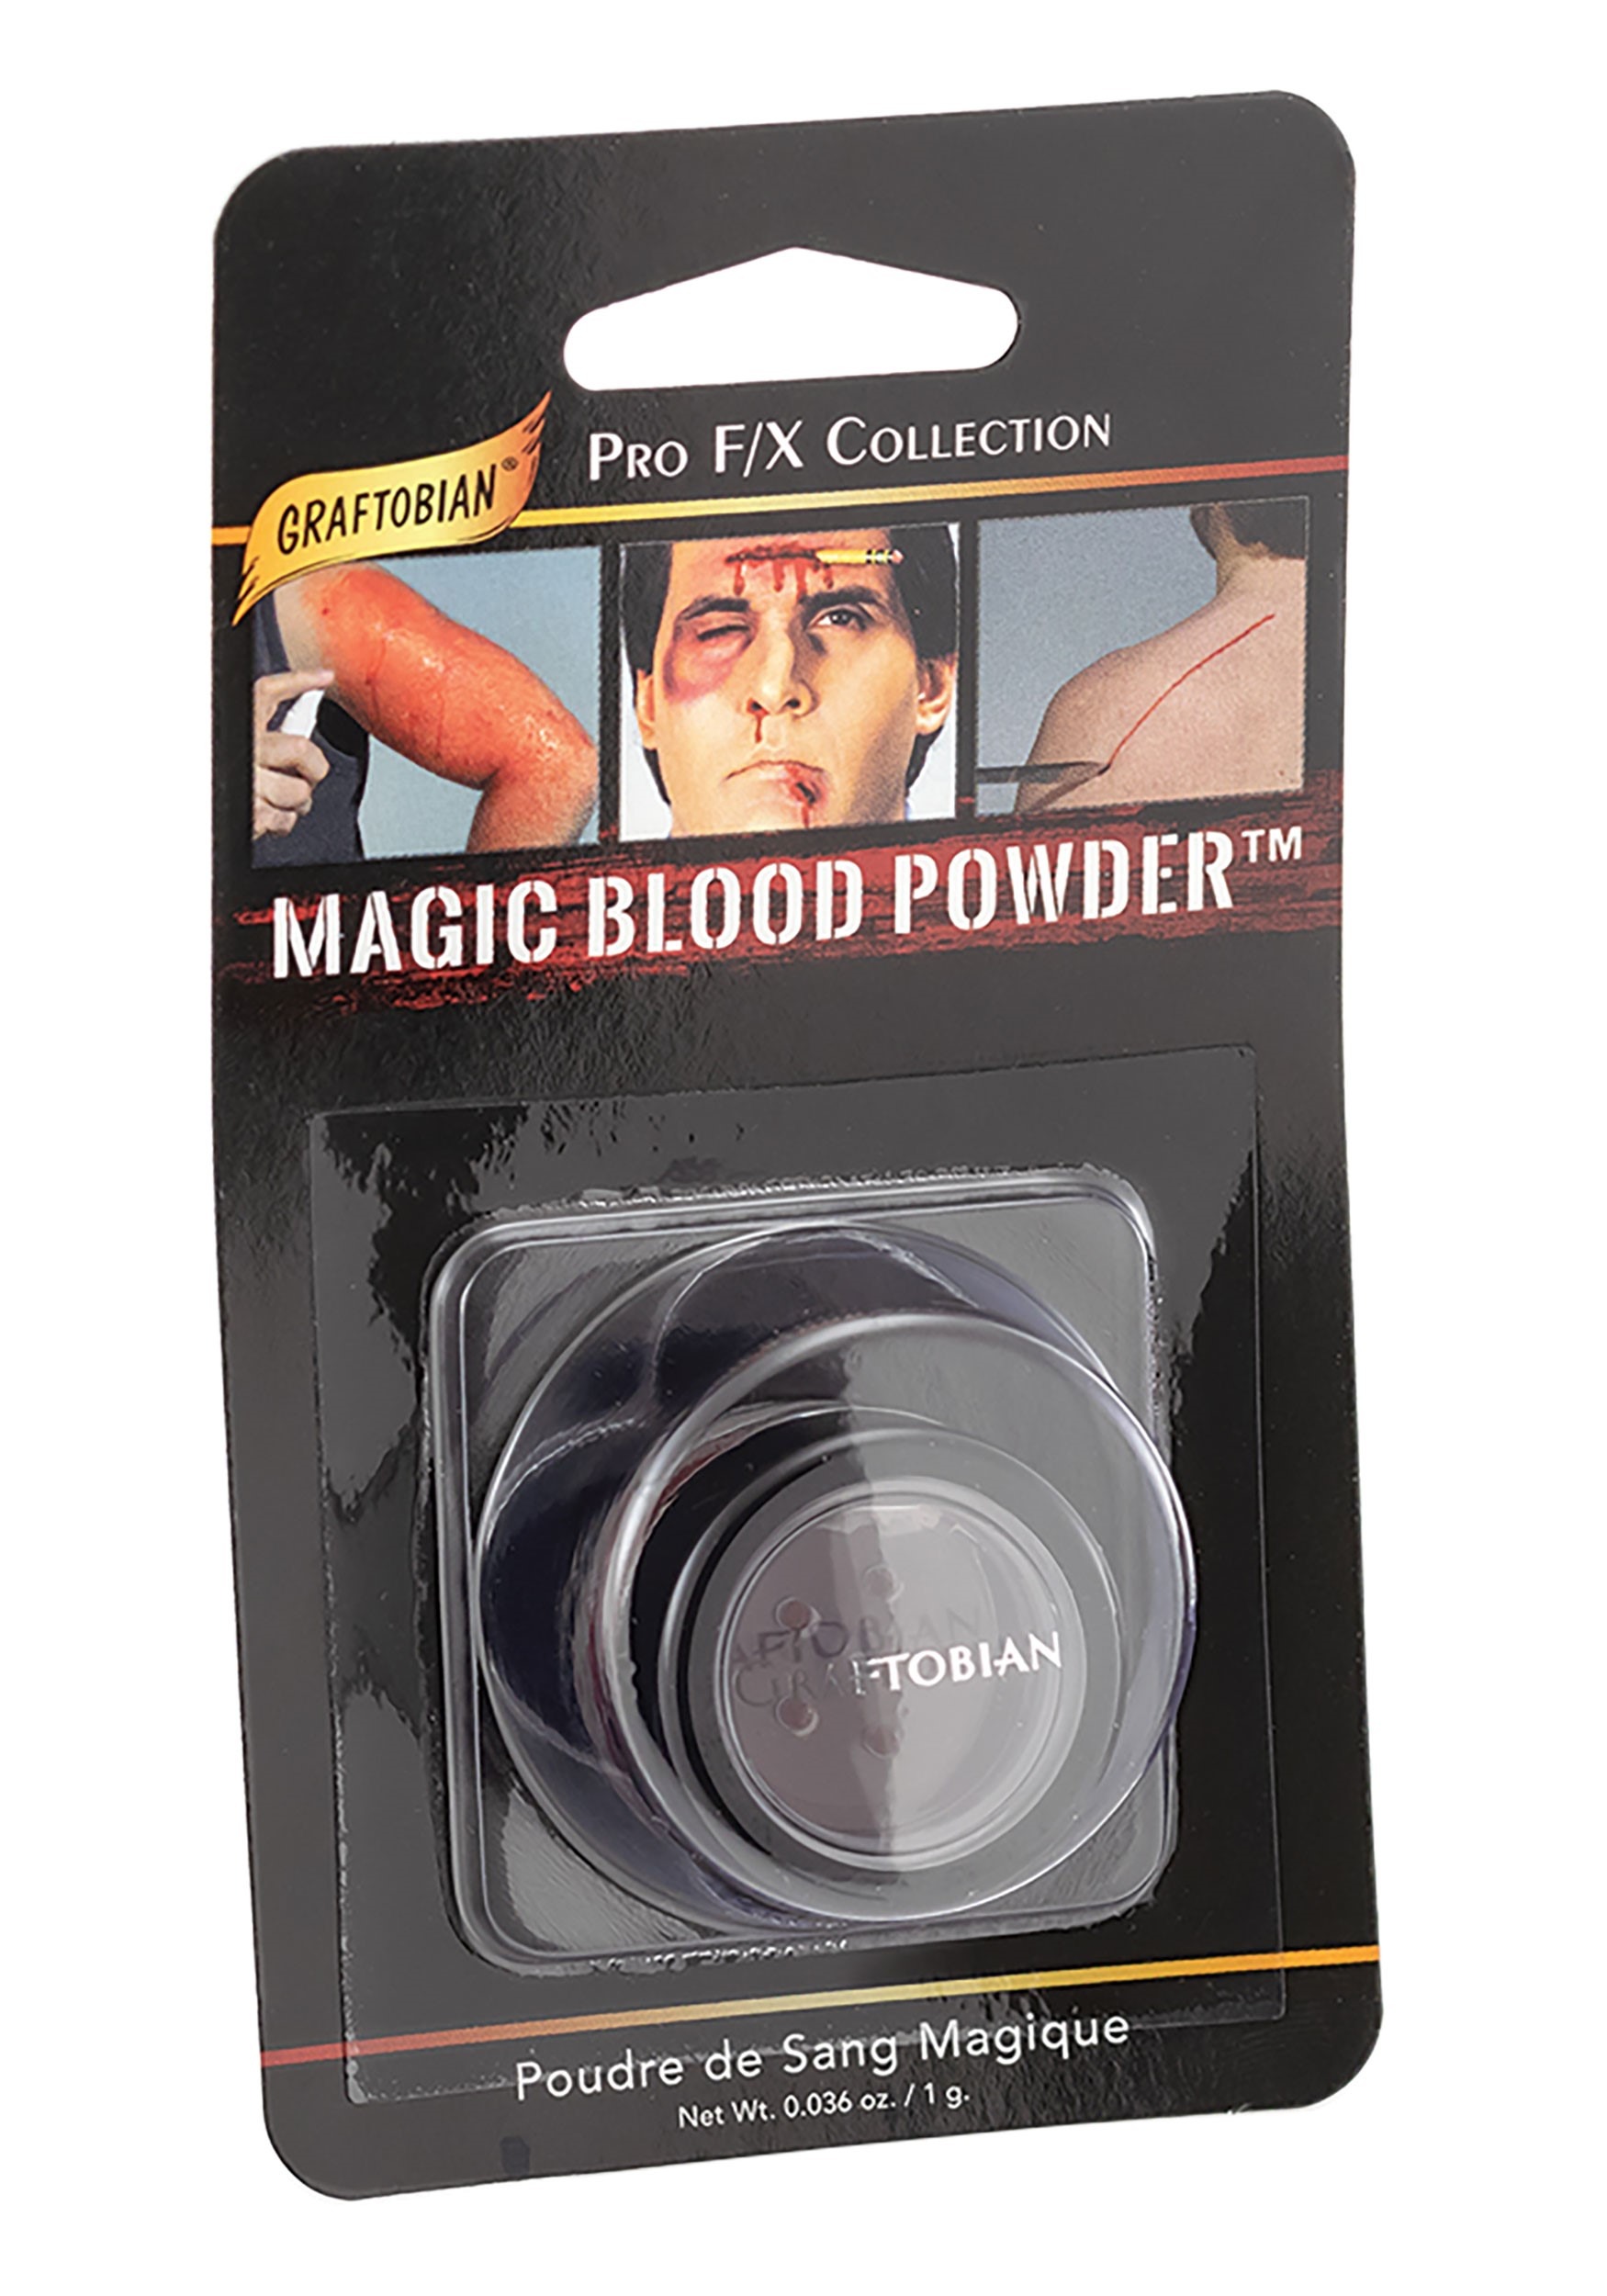 Graftobian Magic Blood Powder